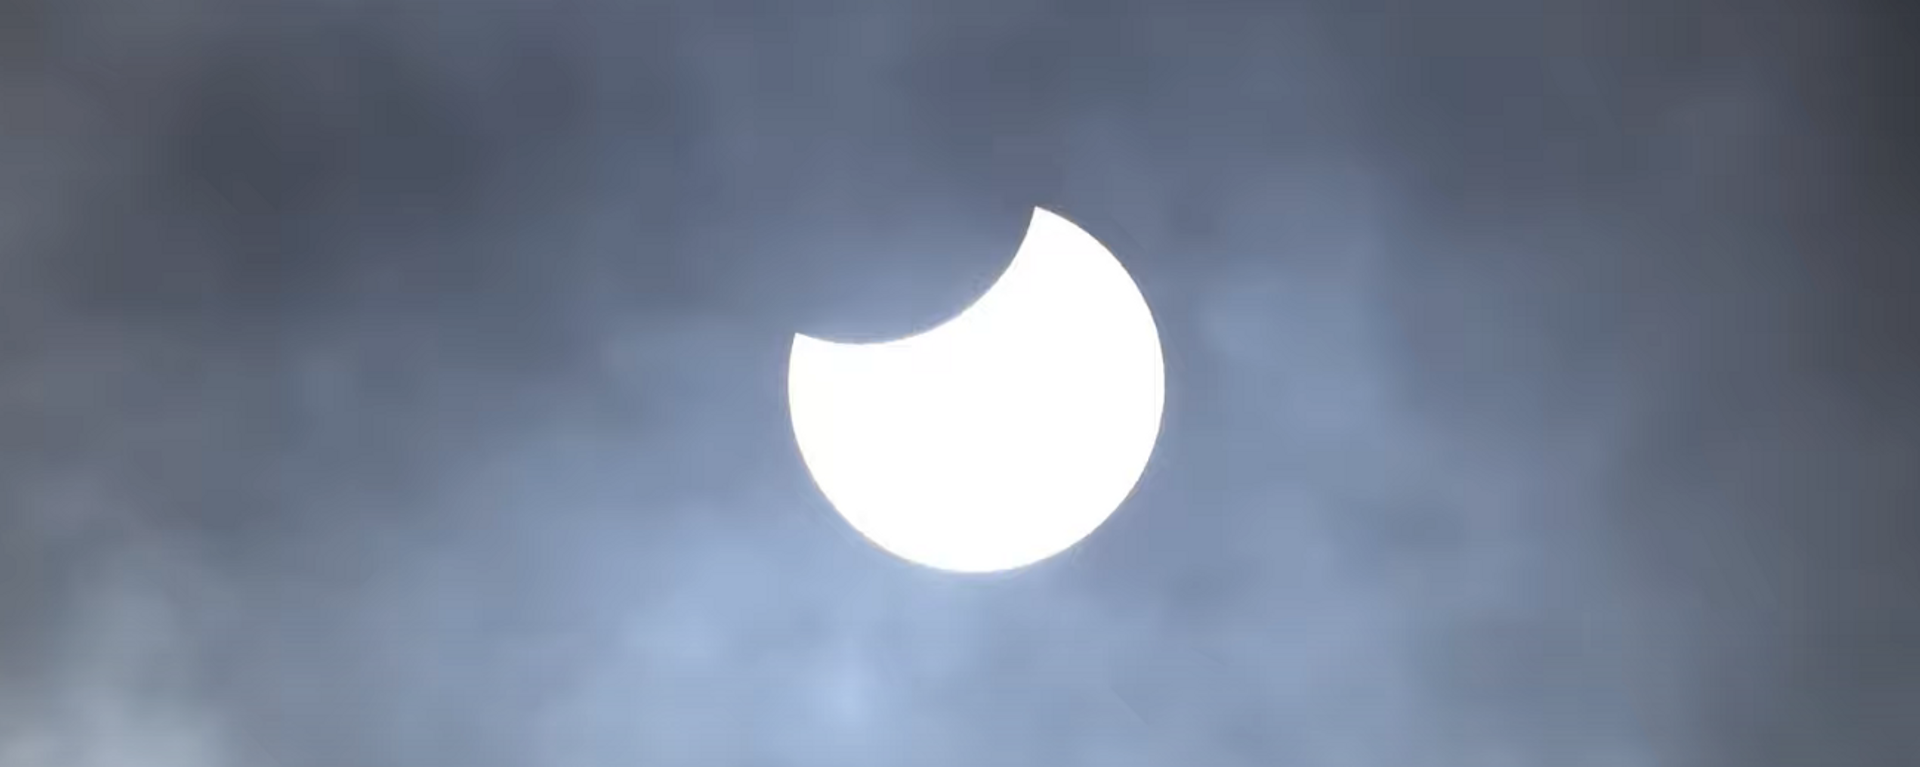 Редкое кольцеобразное затмение Солнца сняли на видео - Sputnik Литва, 1920, 10.06.2021